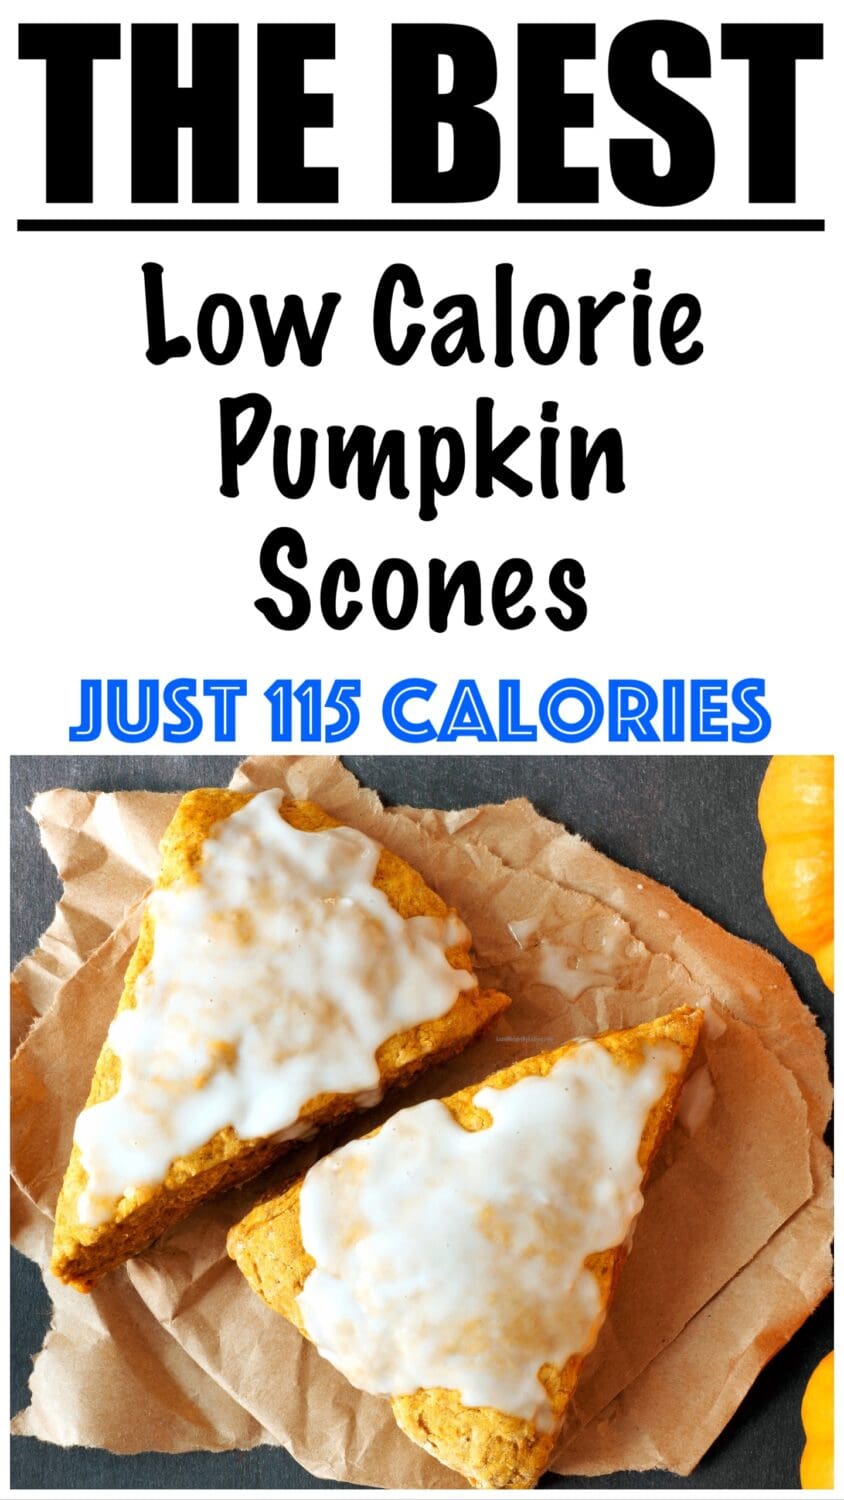 Low Calorie Pumpkin Scones Recipe